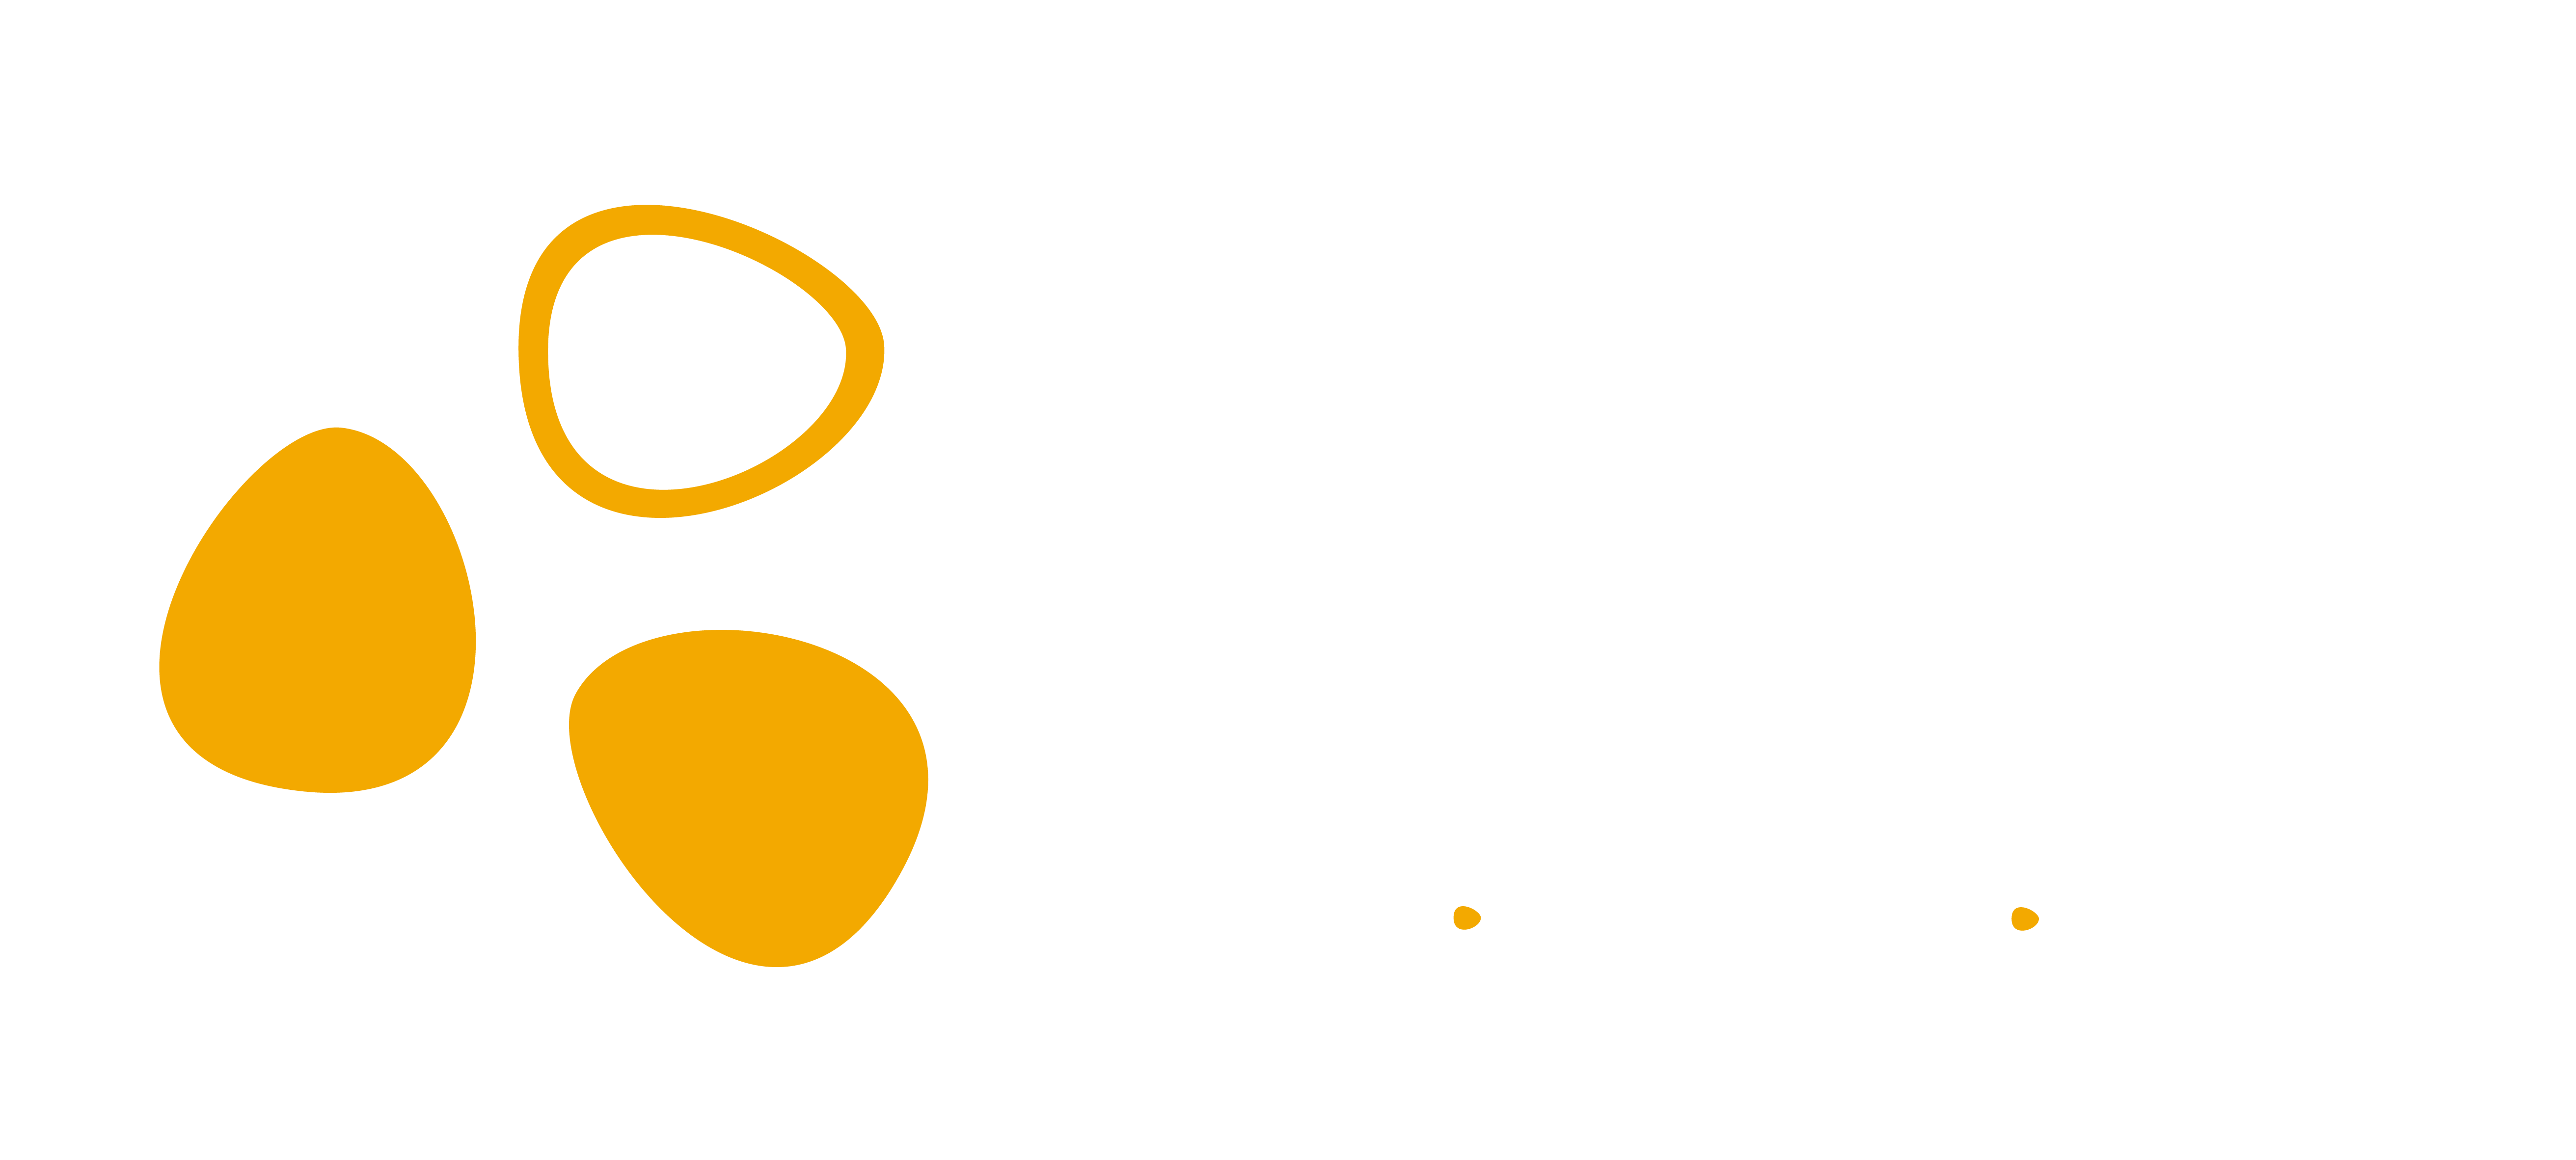 Logo groep ubuntu